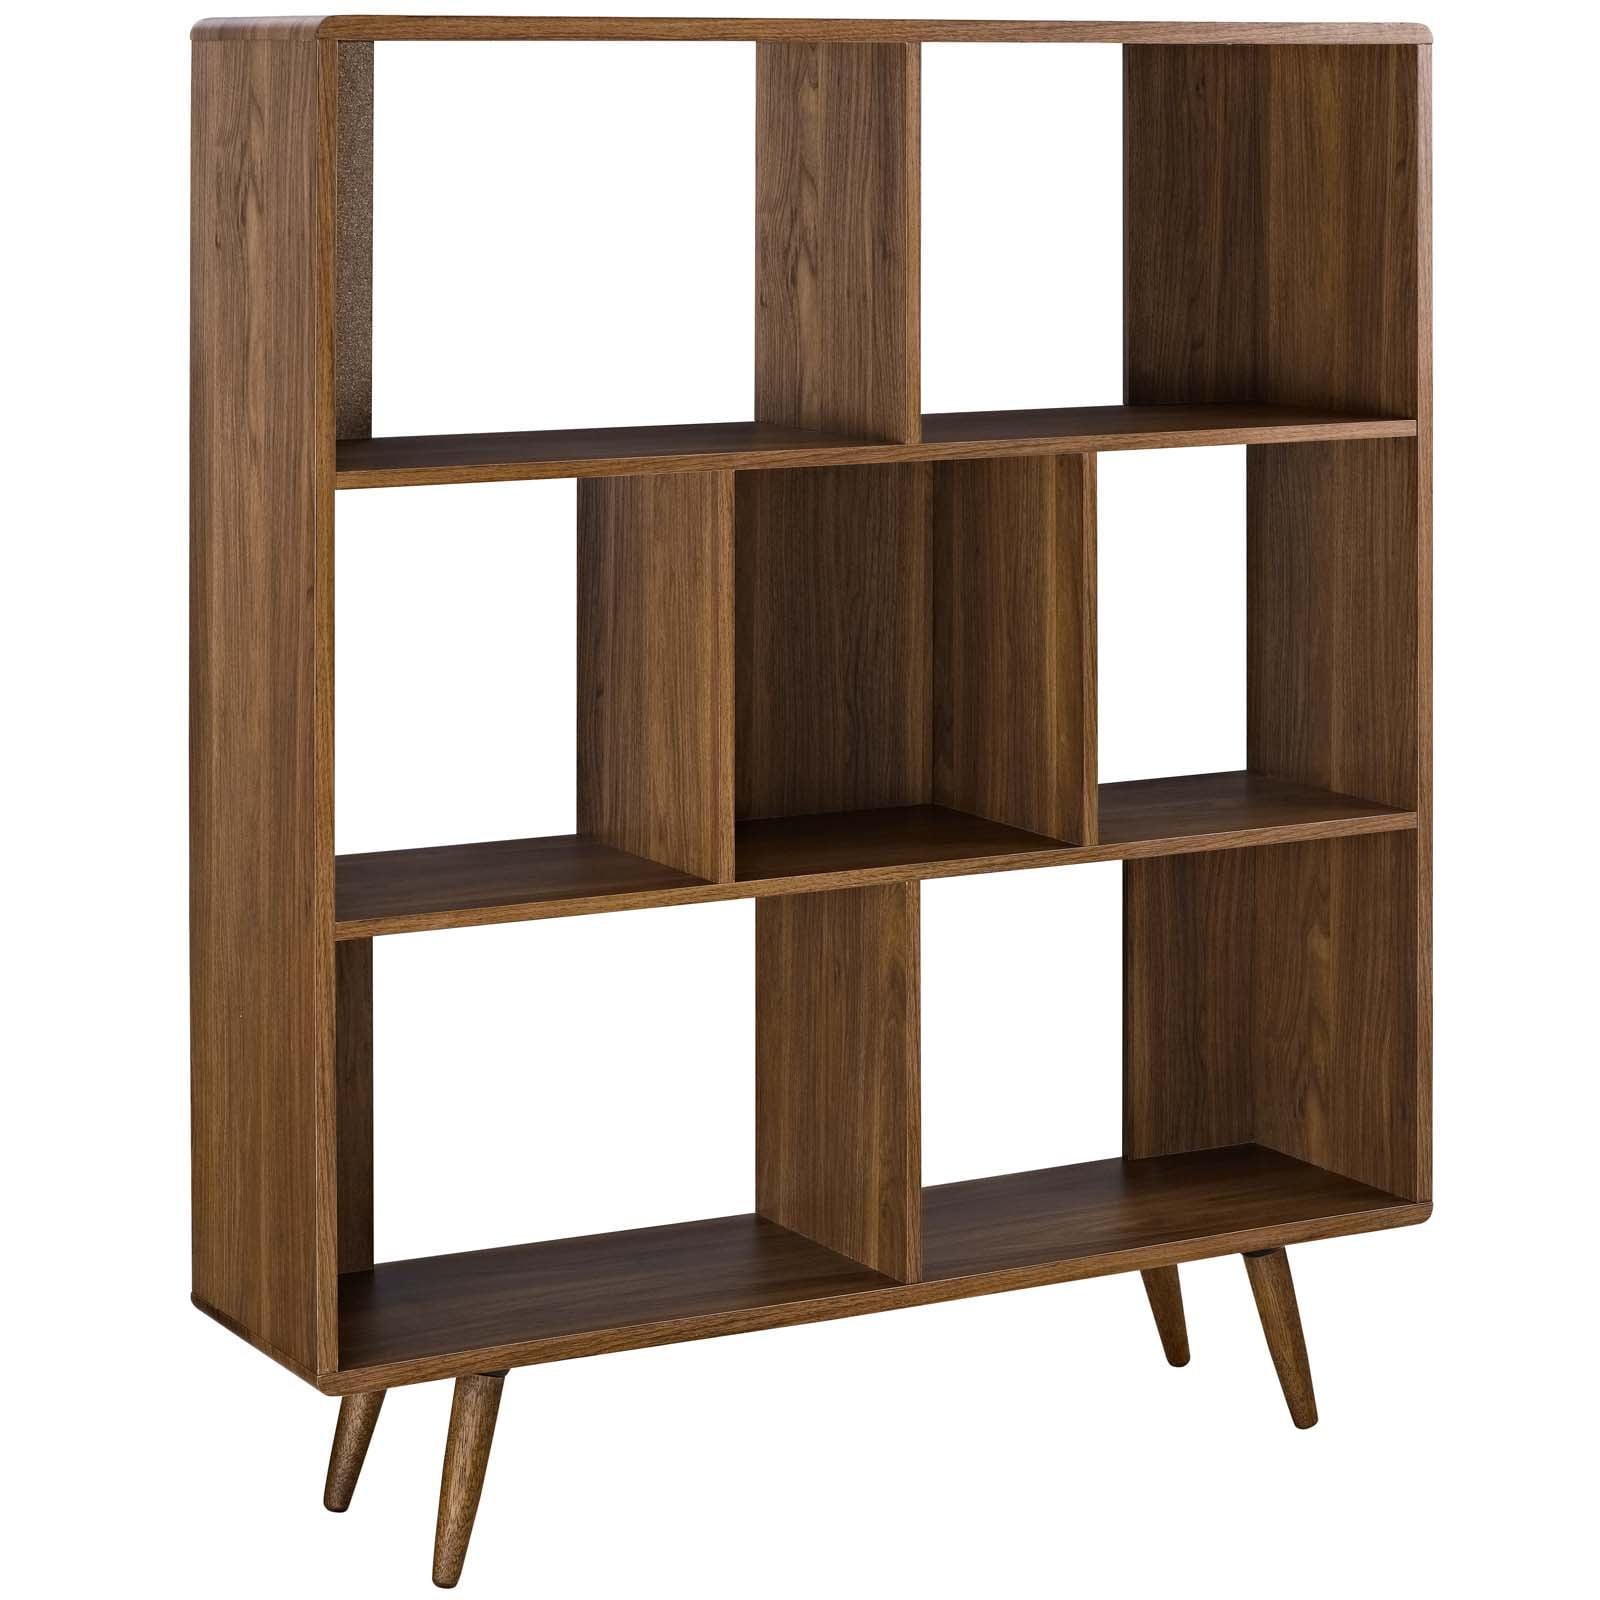 Walnut Grain Corner Bookshelf with Offset Cubes - 45"x52.5"